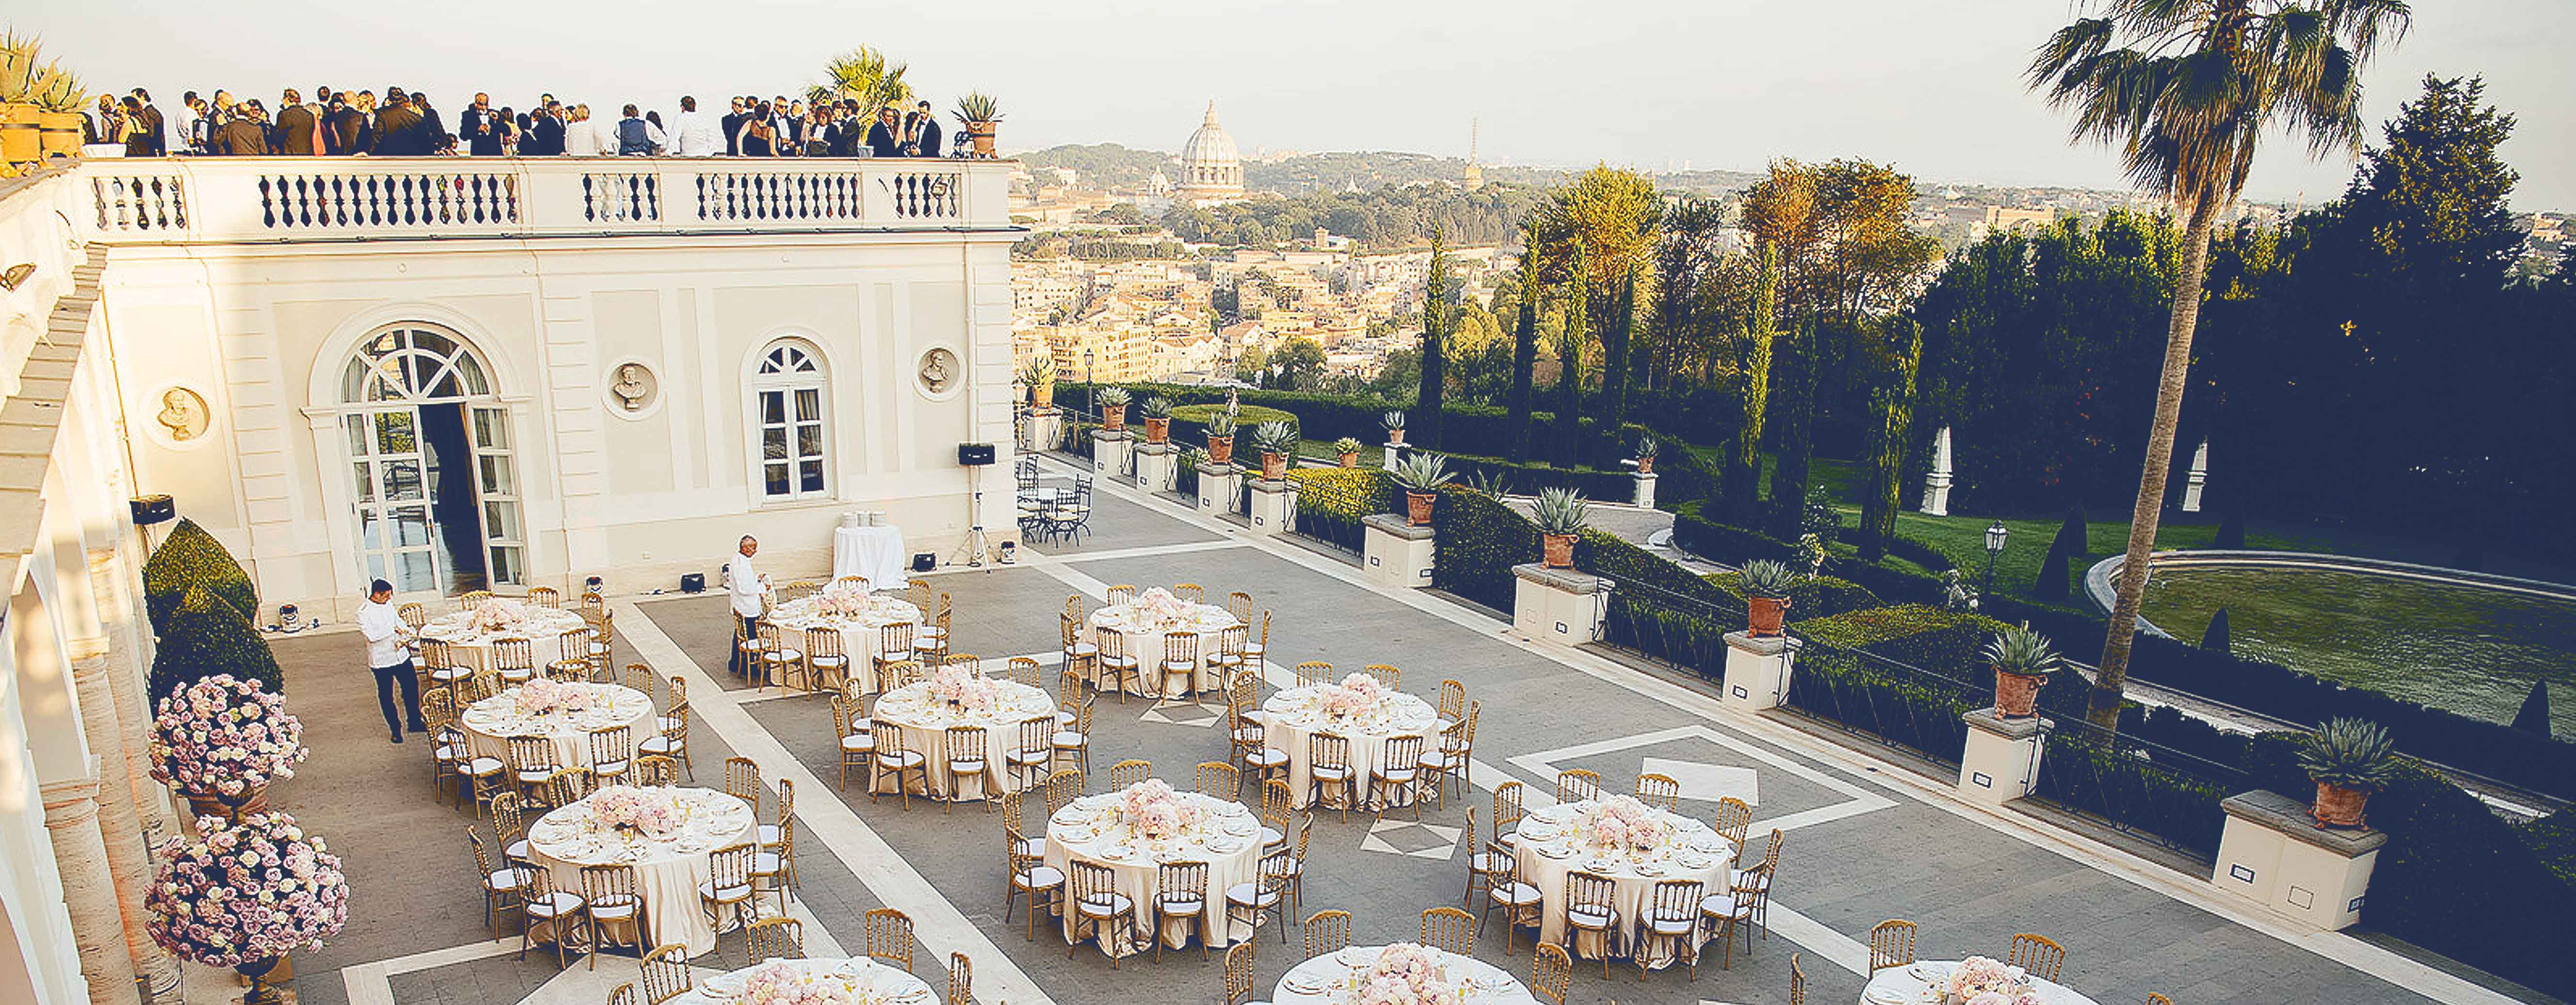 Wedding Venues in Italy: Rome, Venice, Florence, Verona